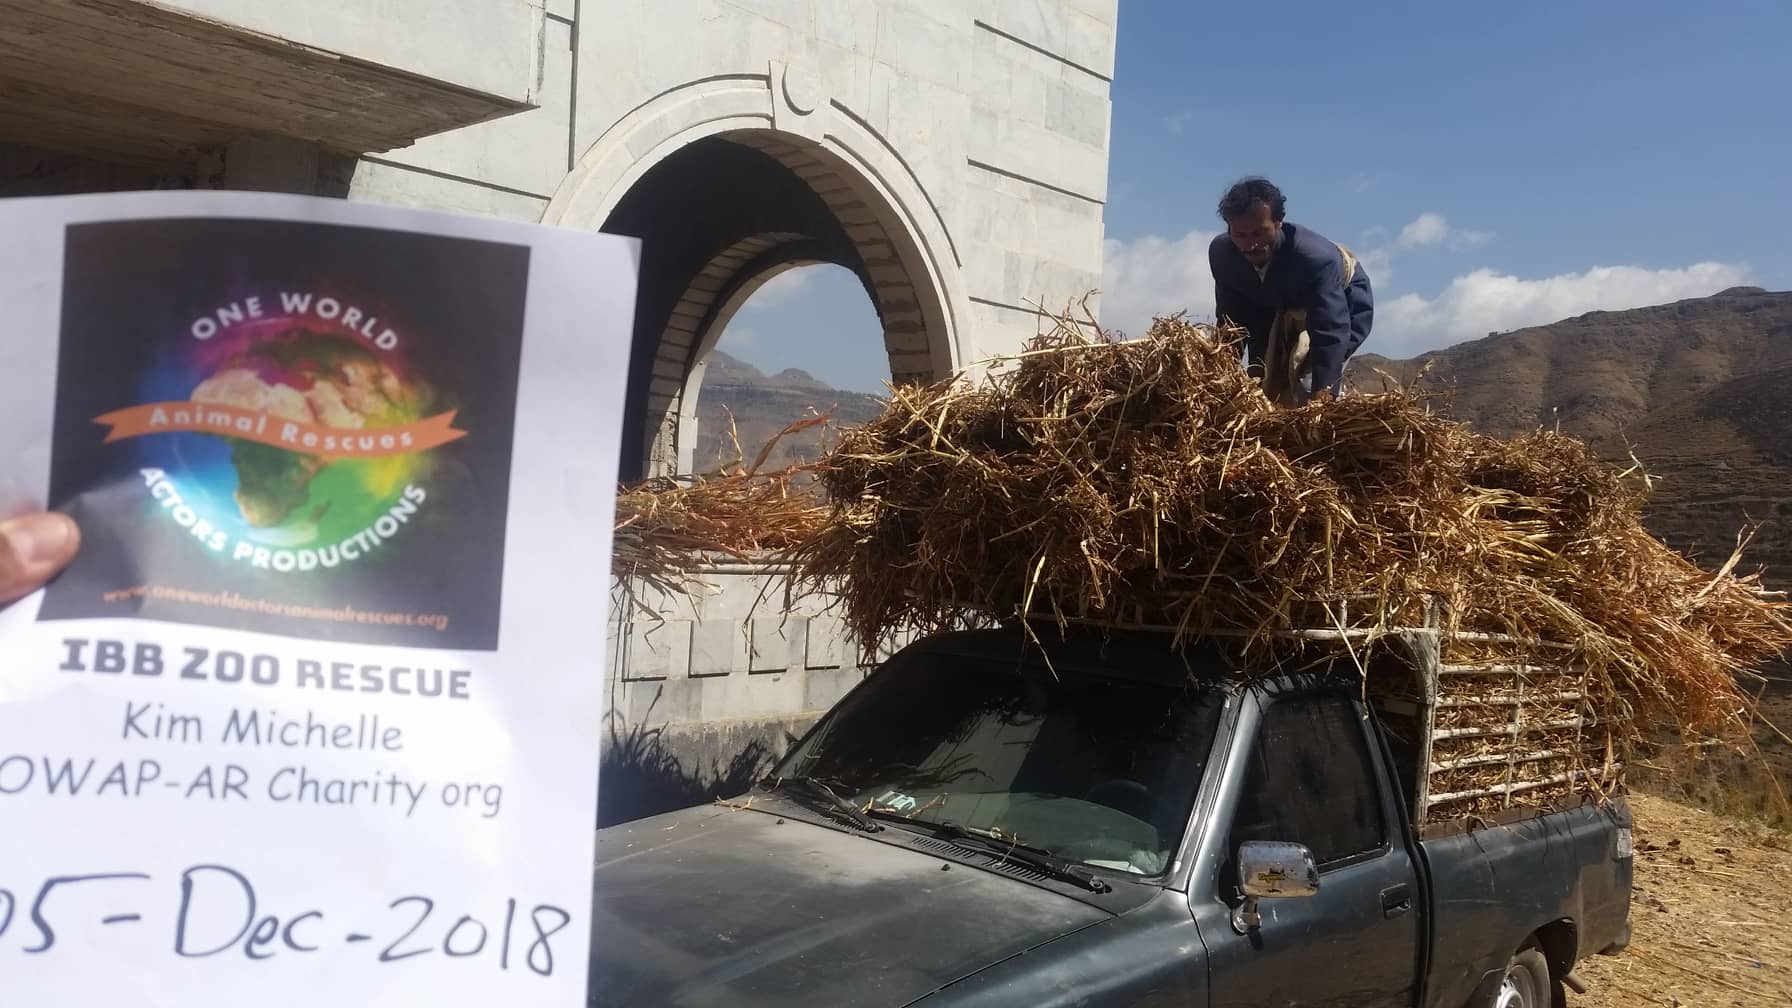 ibb zoo rescue by OWAP-AR yemen 5 dec 2018 zabedi delivering corn sticks  sign Hisham.jpg